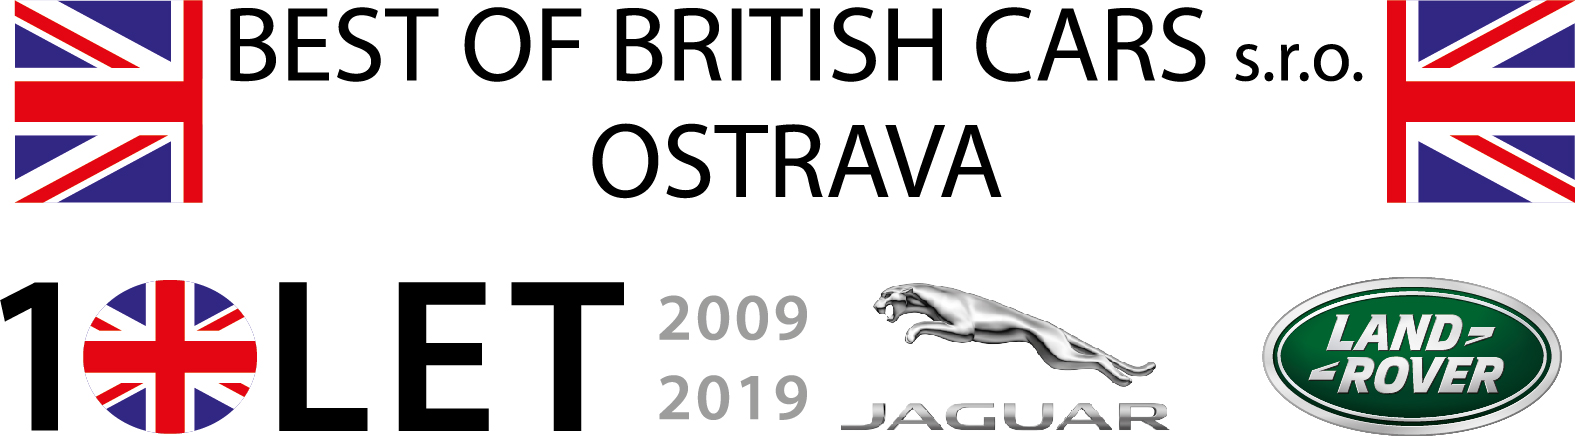 Best of British Cars Ostrava